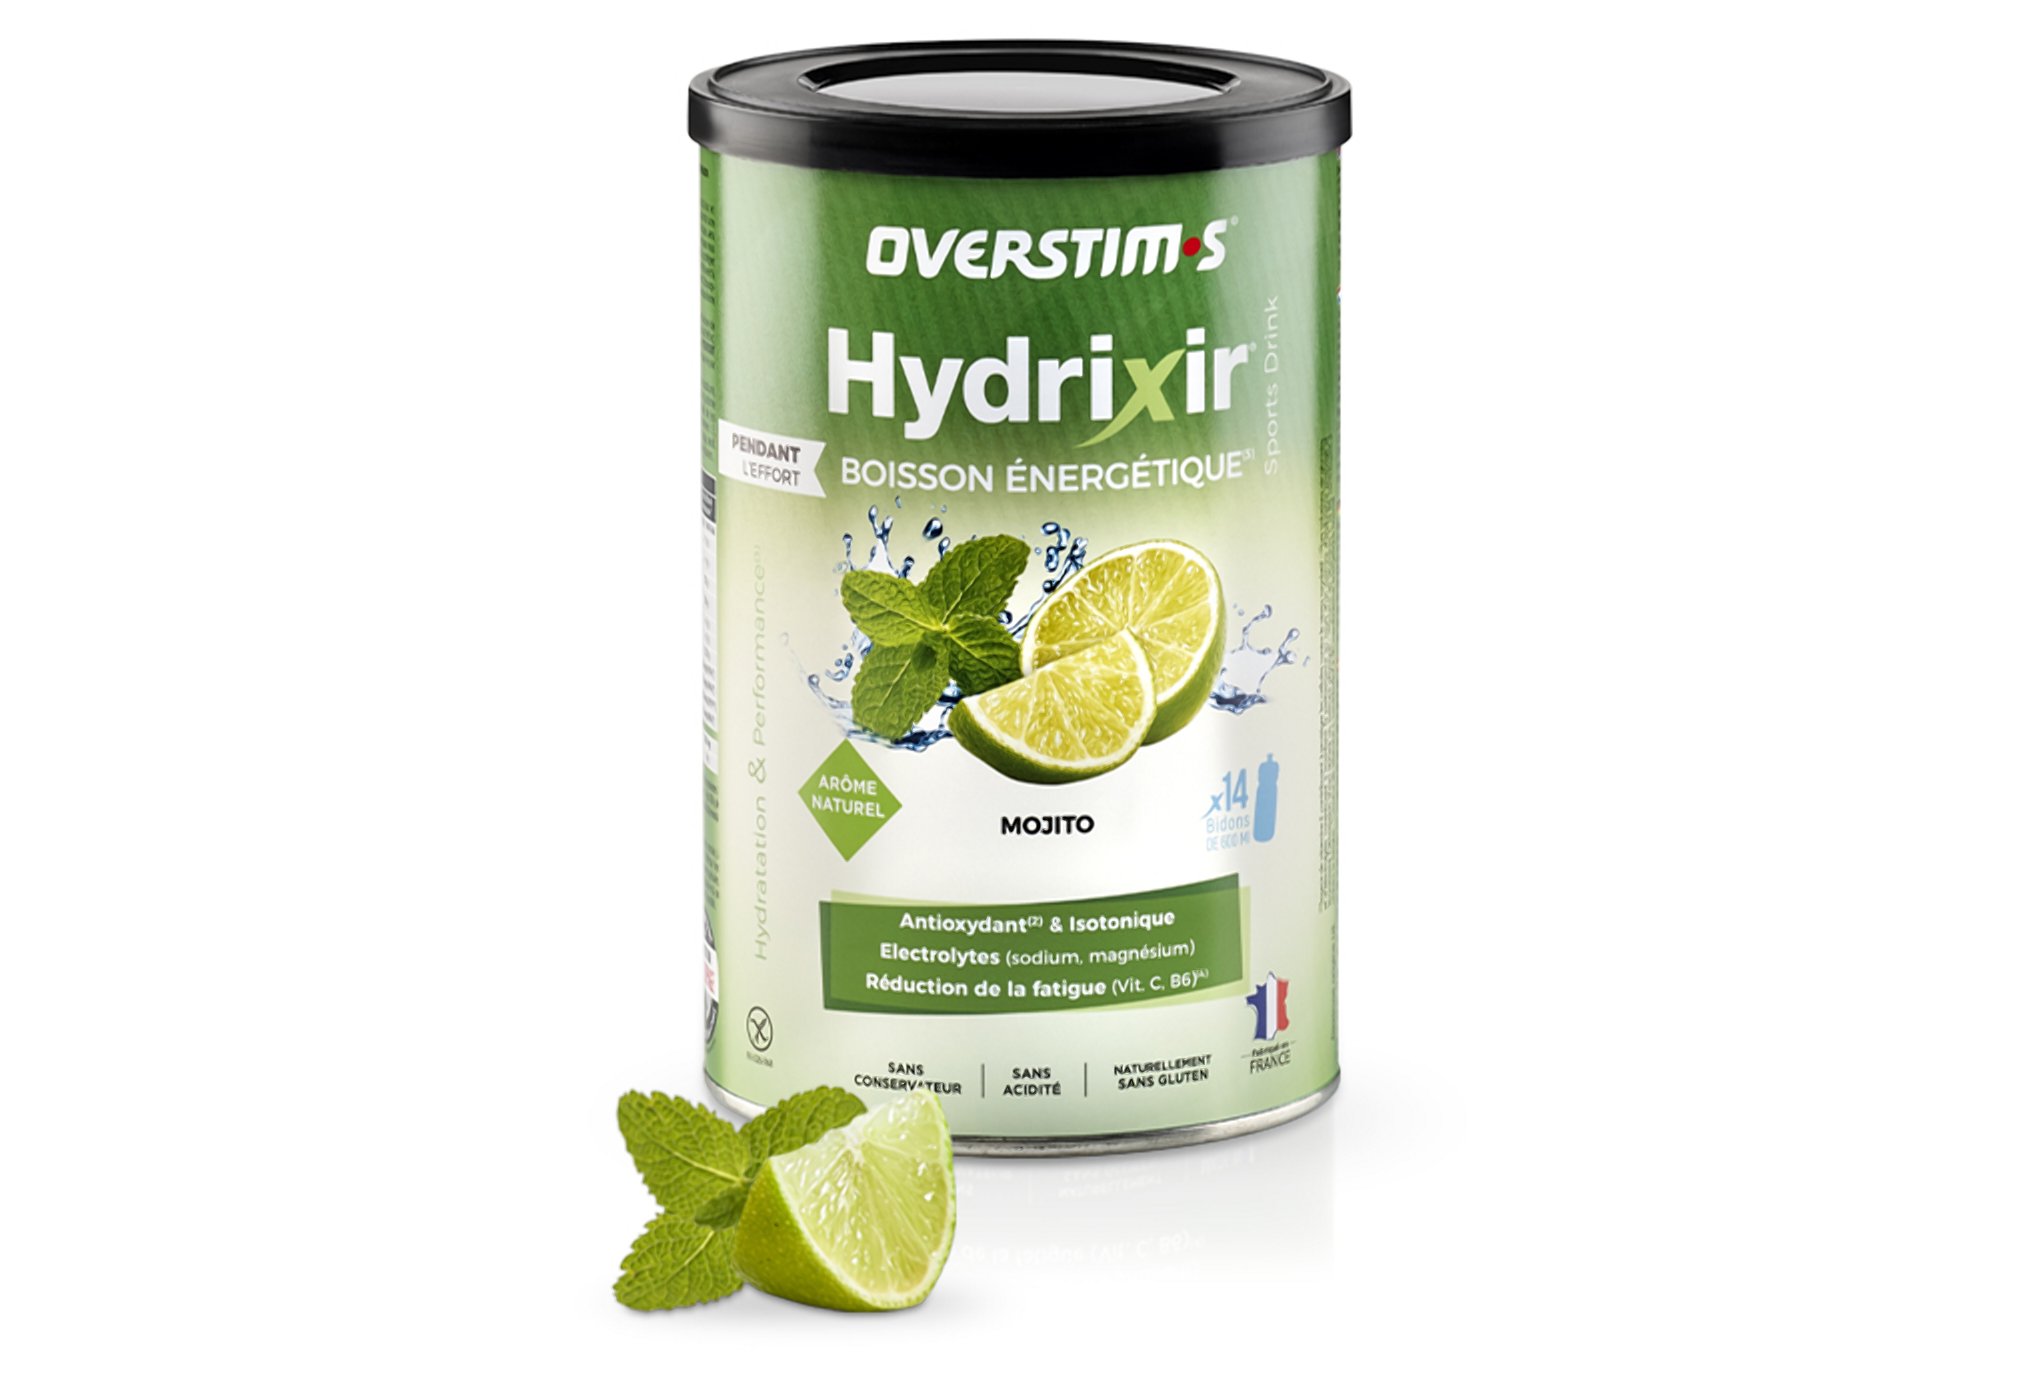 OVERSTIMS Hydrixir 600g - Mojito Diététique Boissons